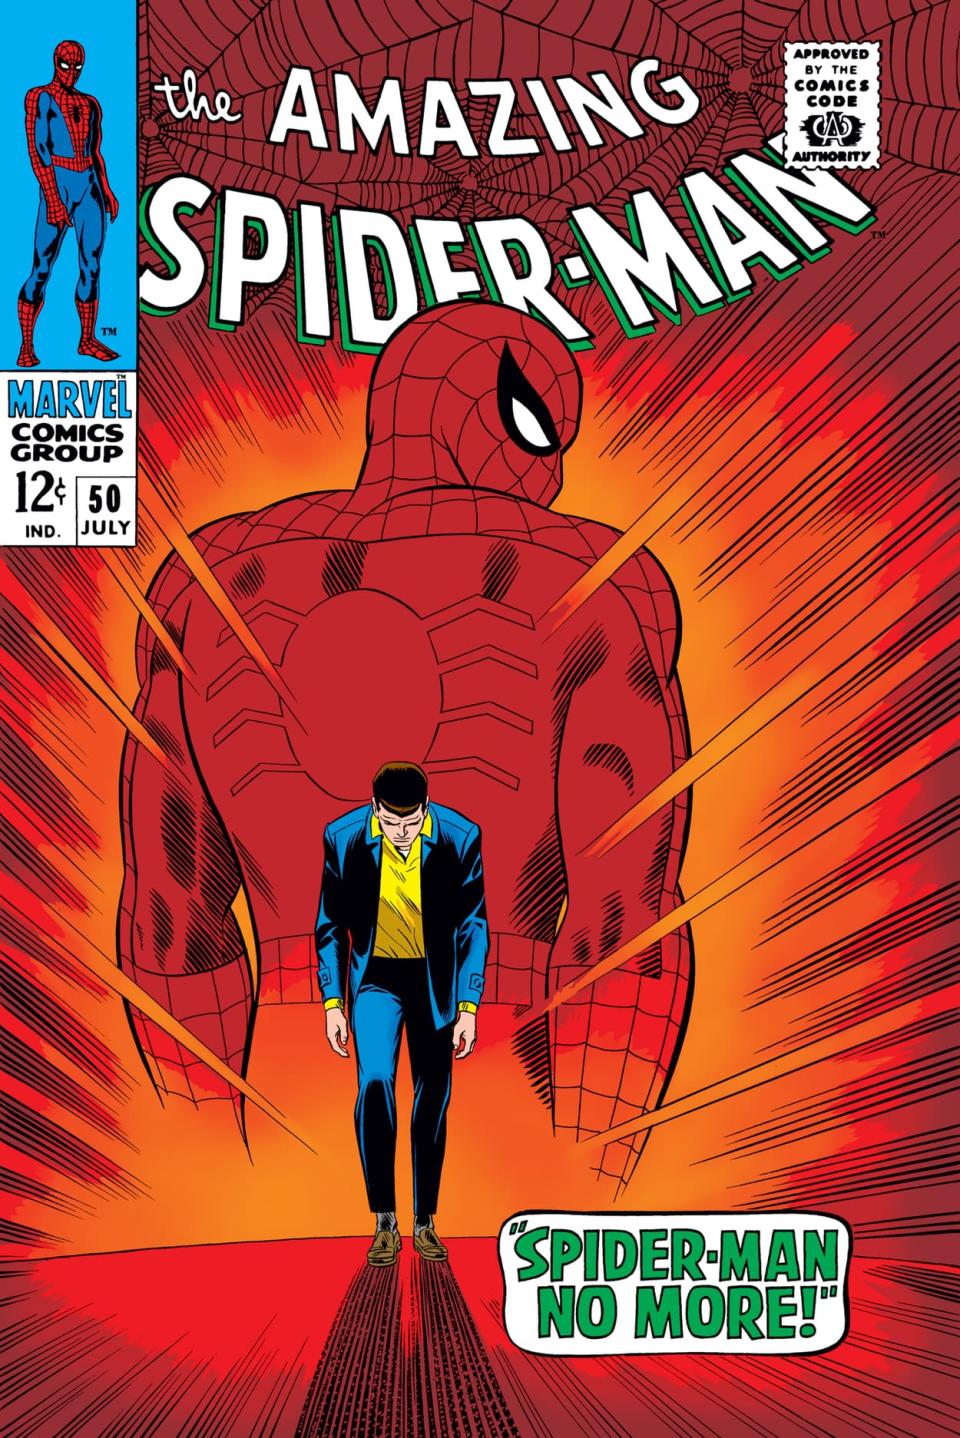 The Amazing Spider-Man # 50 by John Romita Sr.